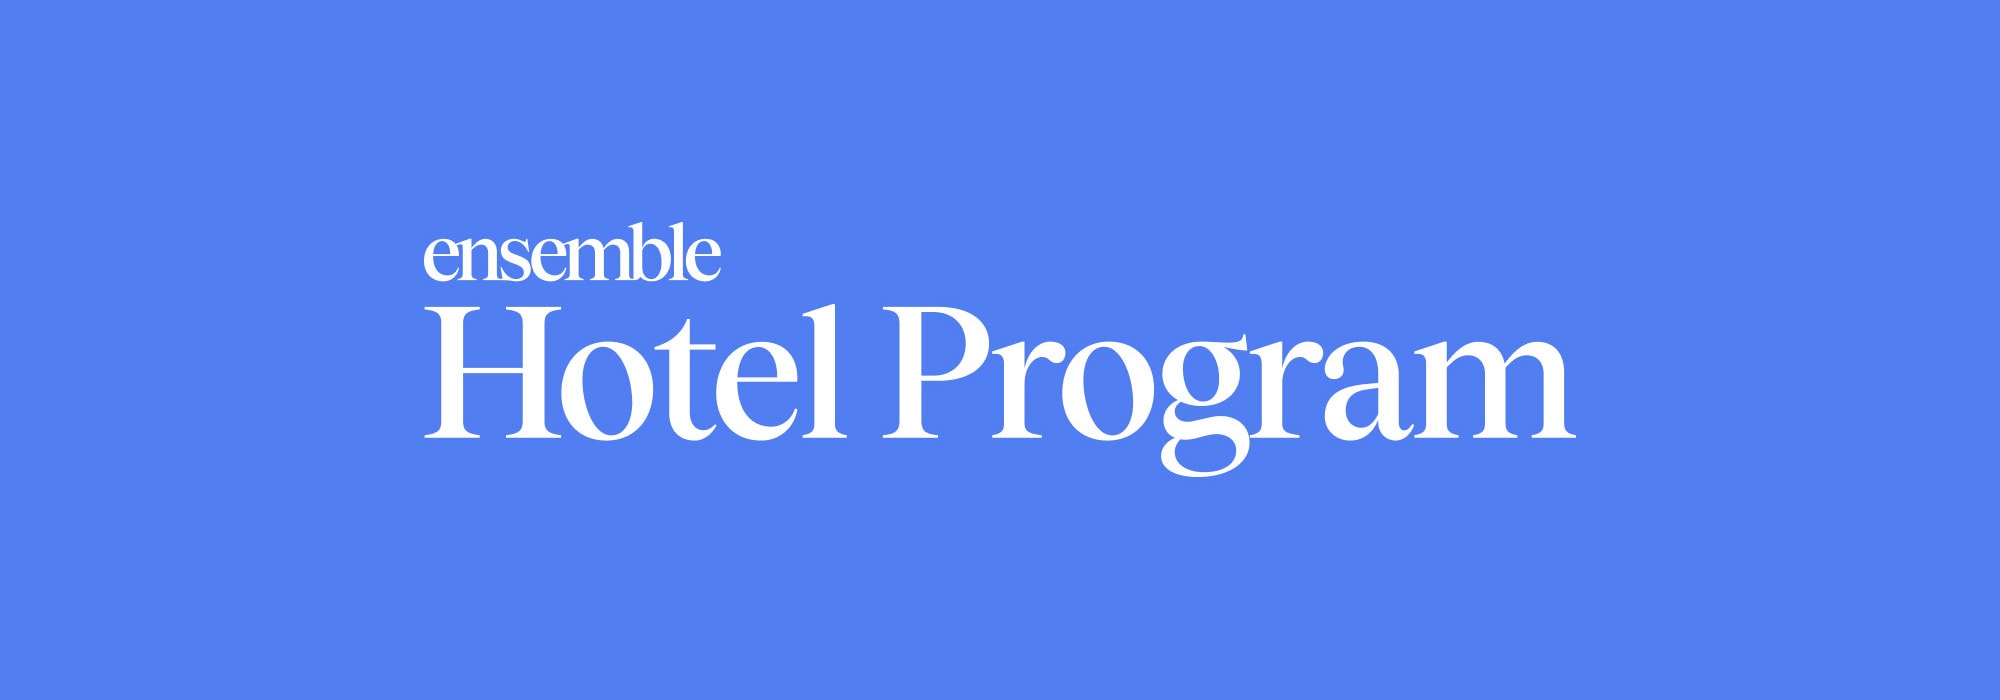 Ensemble Hotel Program